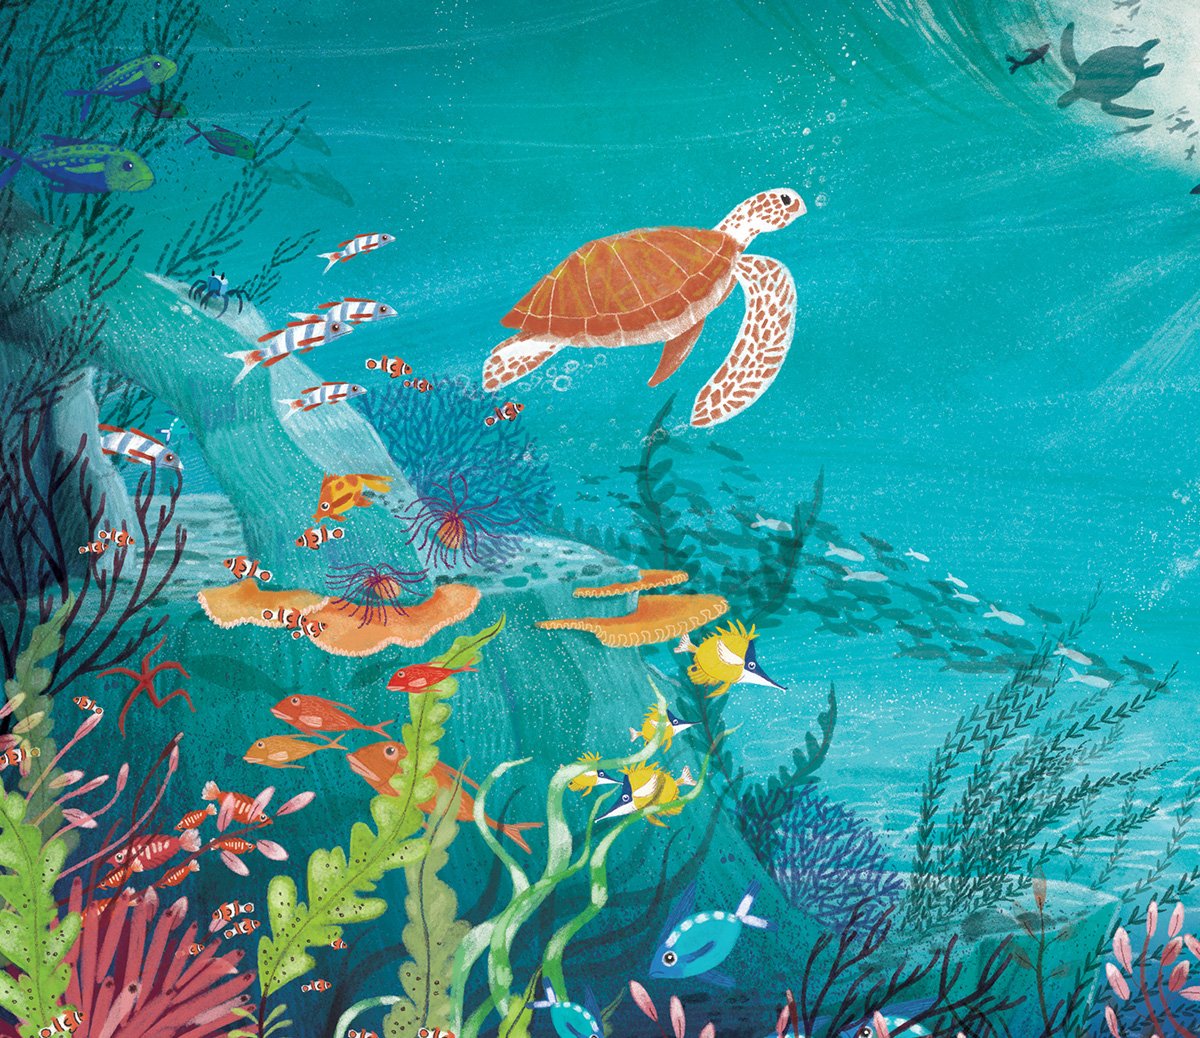 kim-geyer-under-the-sea-illustration.jpg